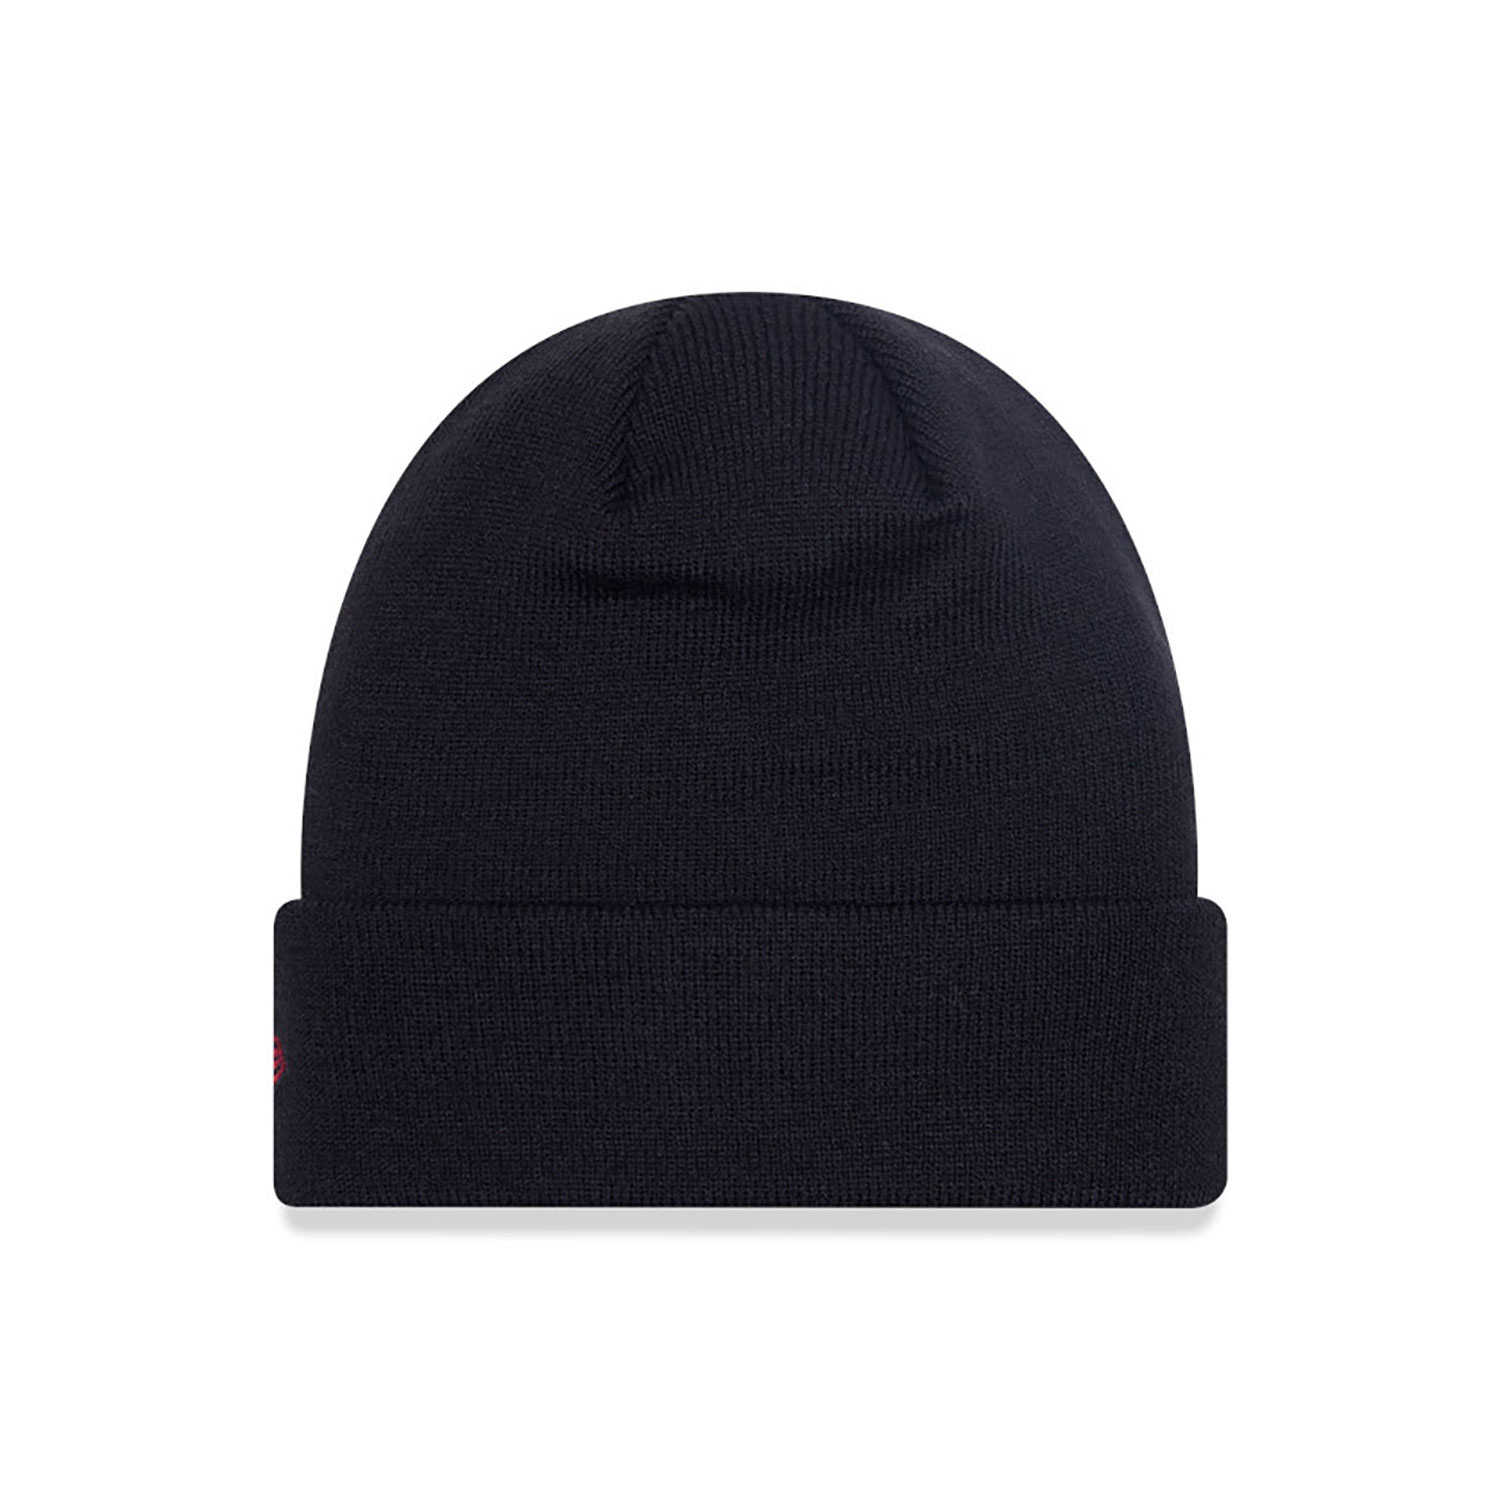 LA Dodgers League Essential Black Cuff Knit Beanie Hat